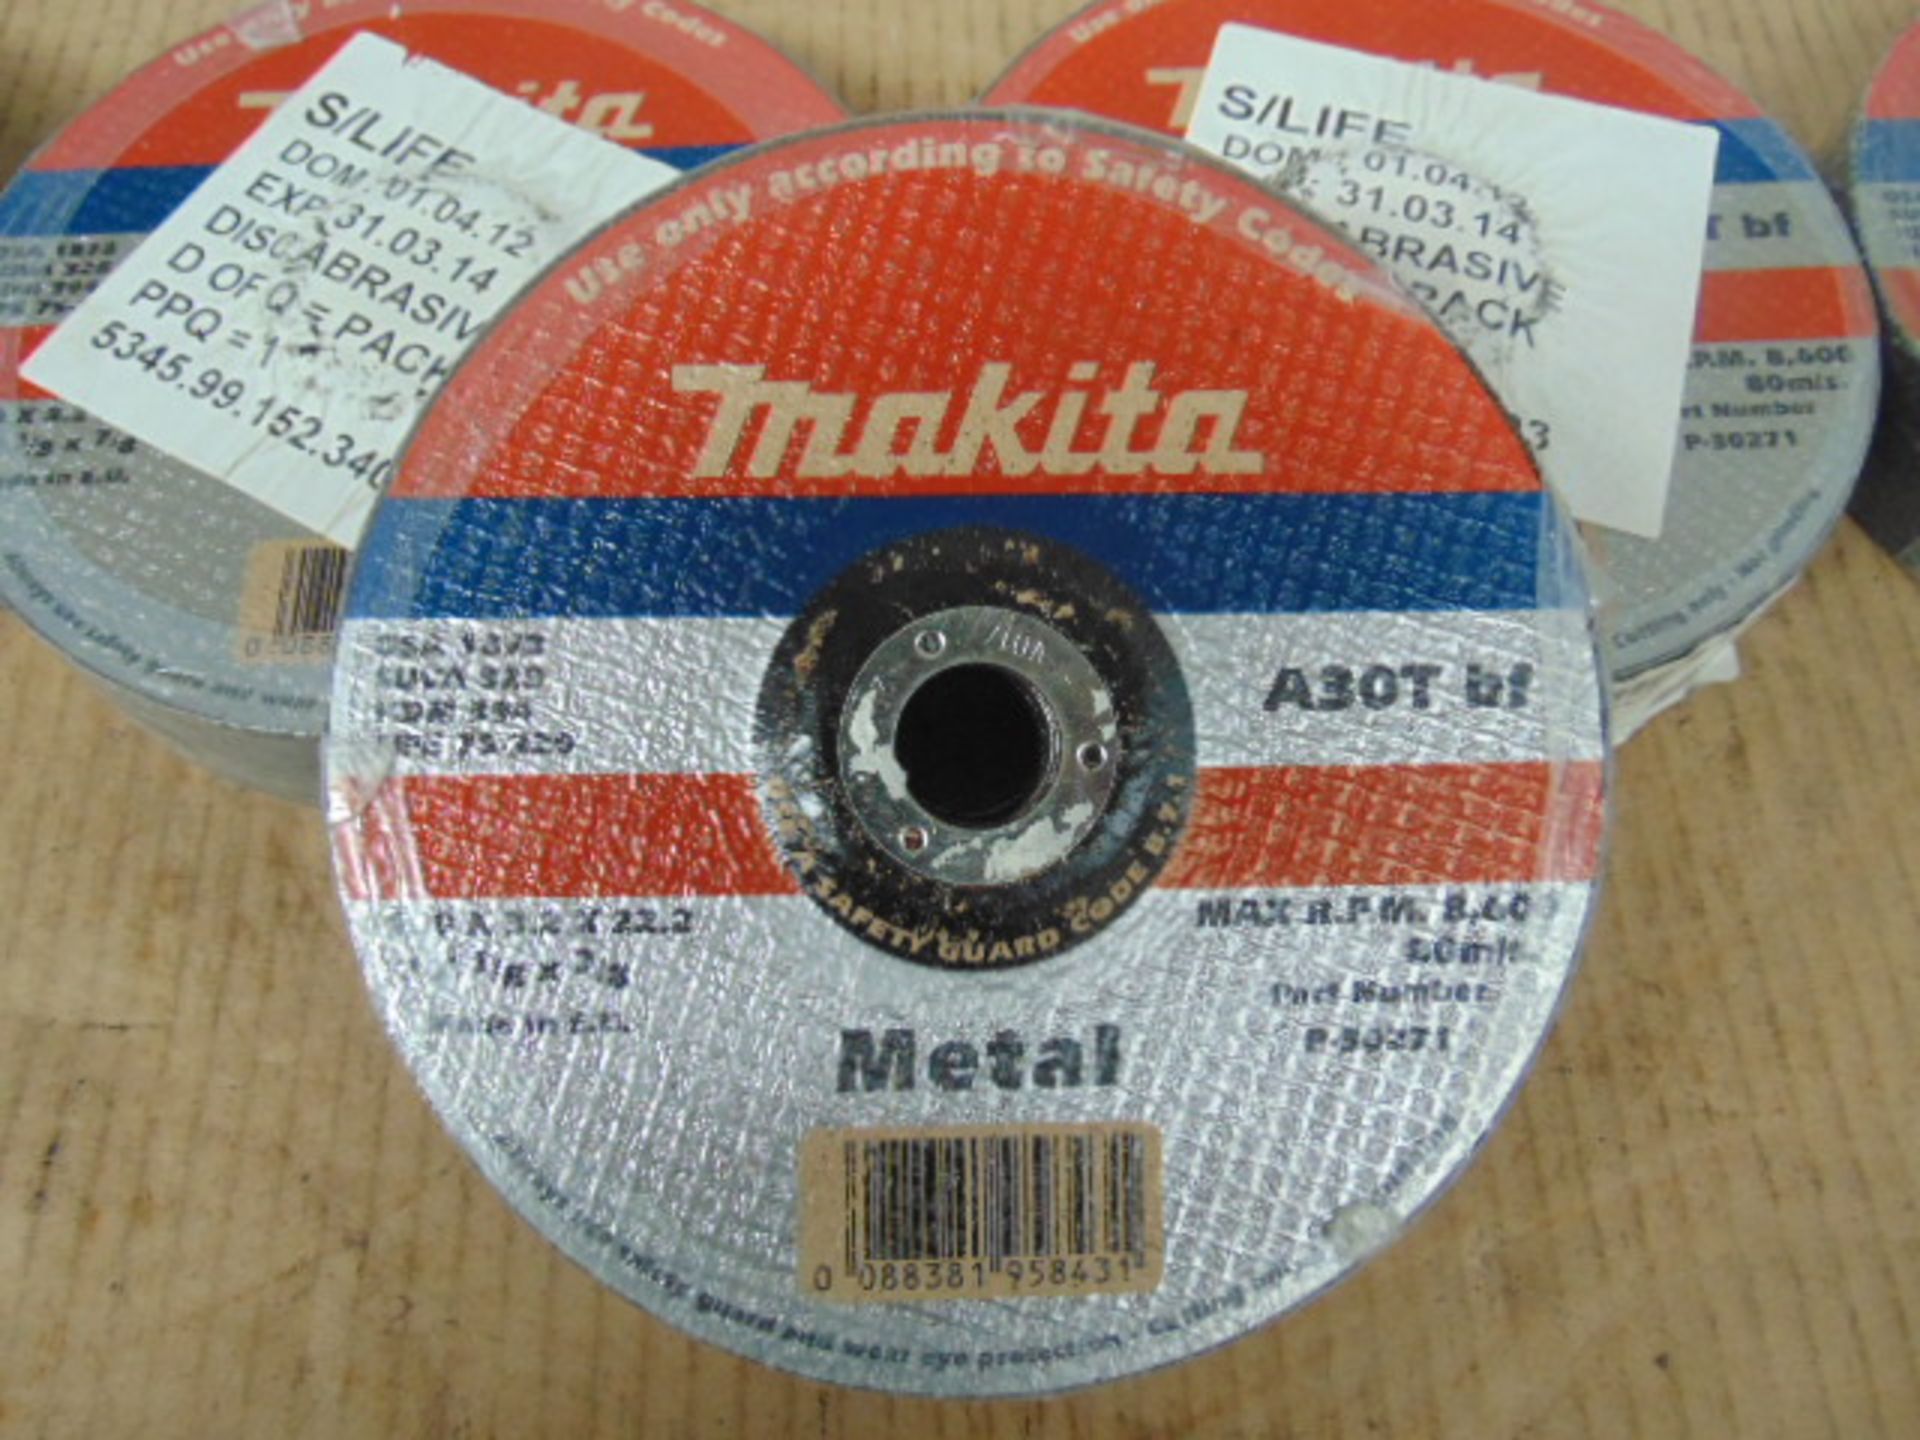 50 x Makita Metal Grinding Disc 180 x 3.2 x 22.2 A30T bf p.30271 - Image 2 of 6